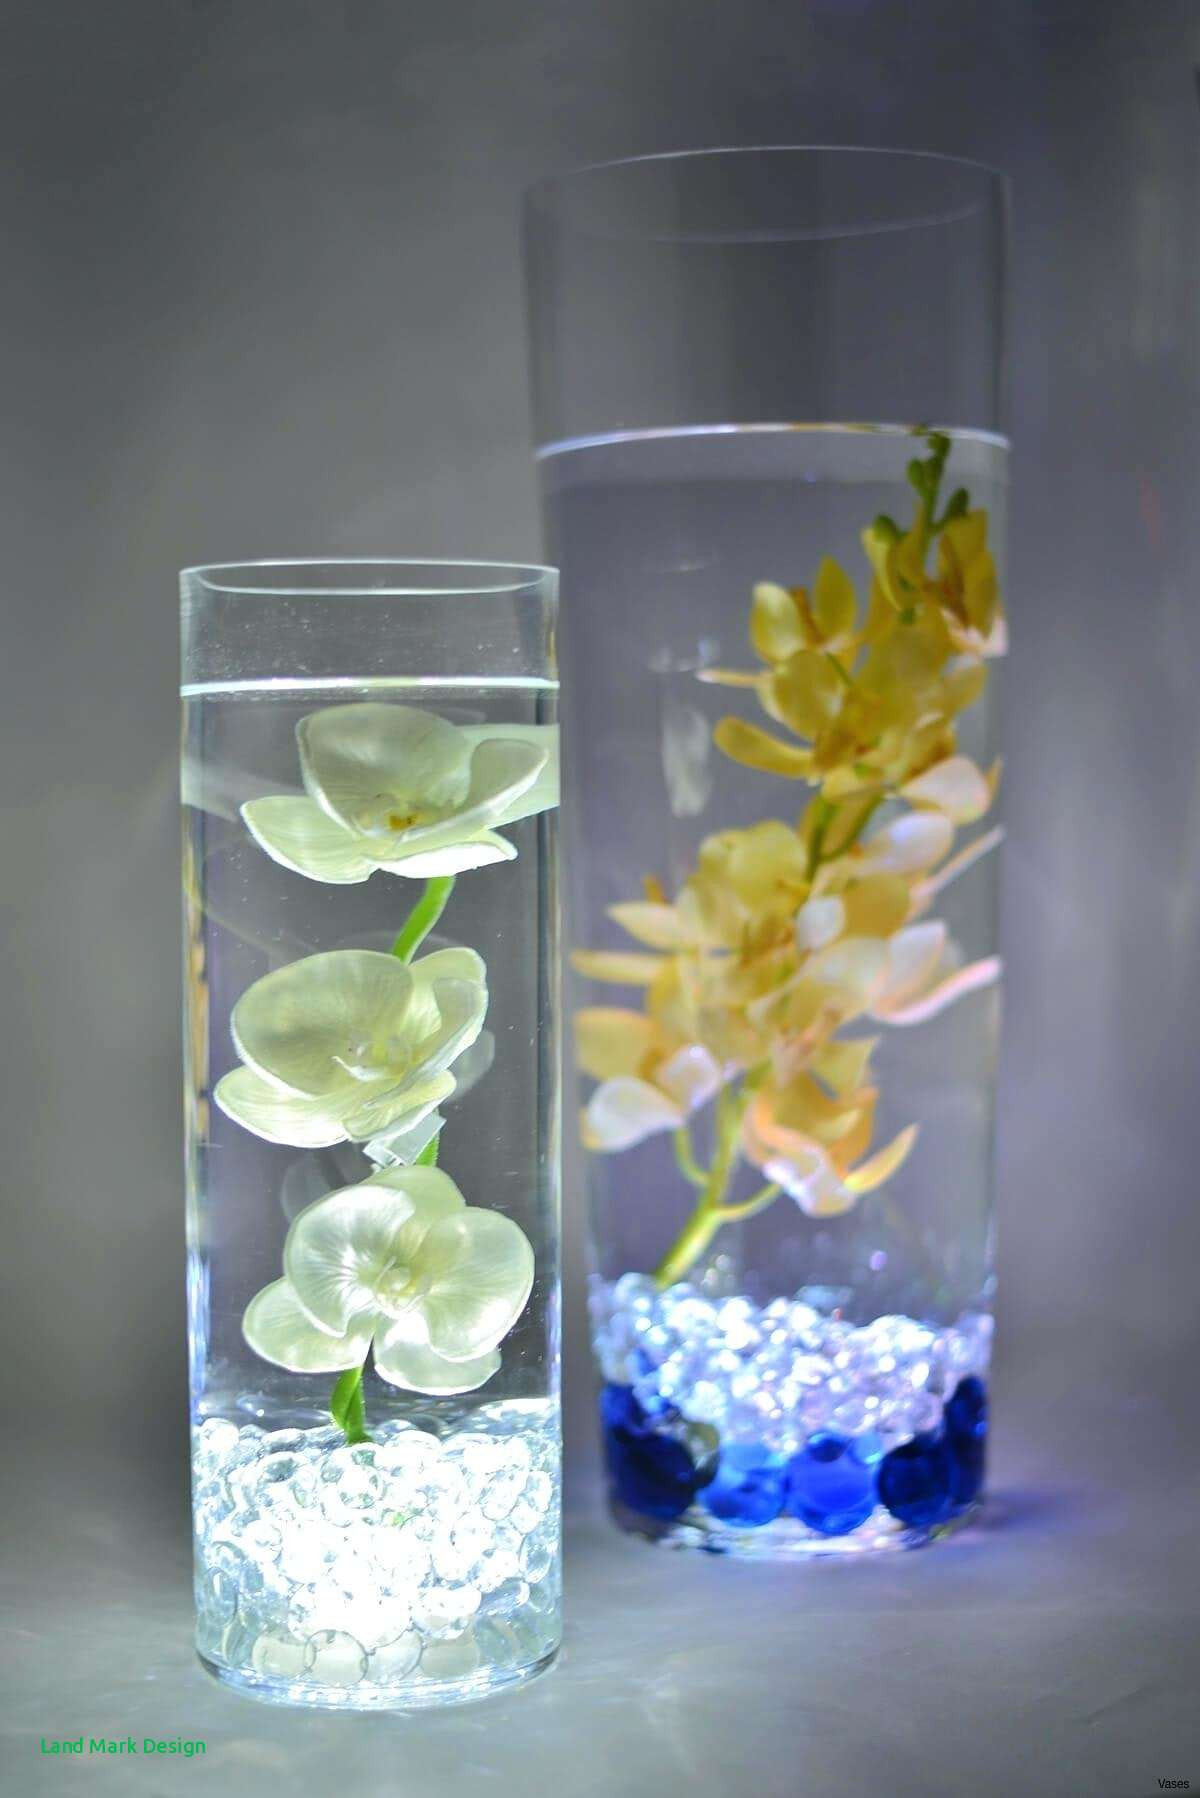 extra large wine glass vase of white cylinder vase photos 3 vases centerpieces design vases within 3 vases centerpieces design